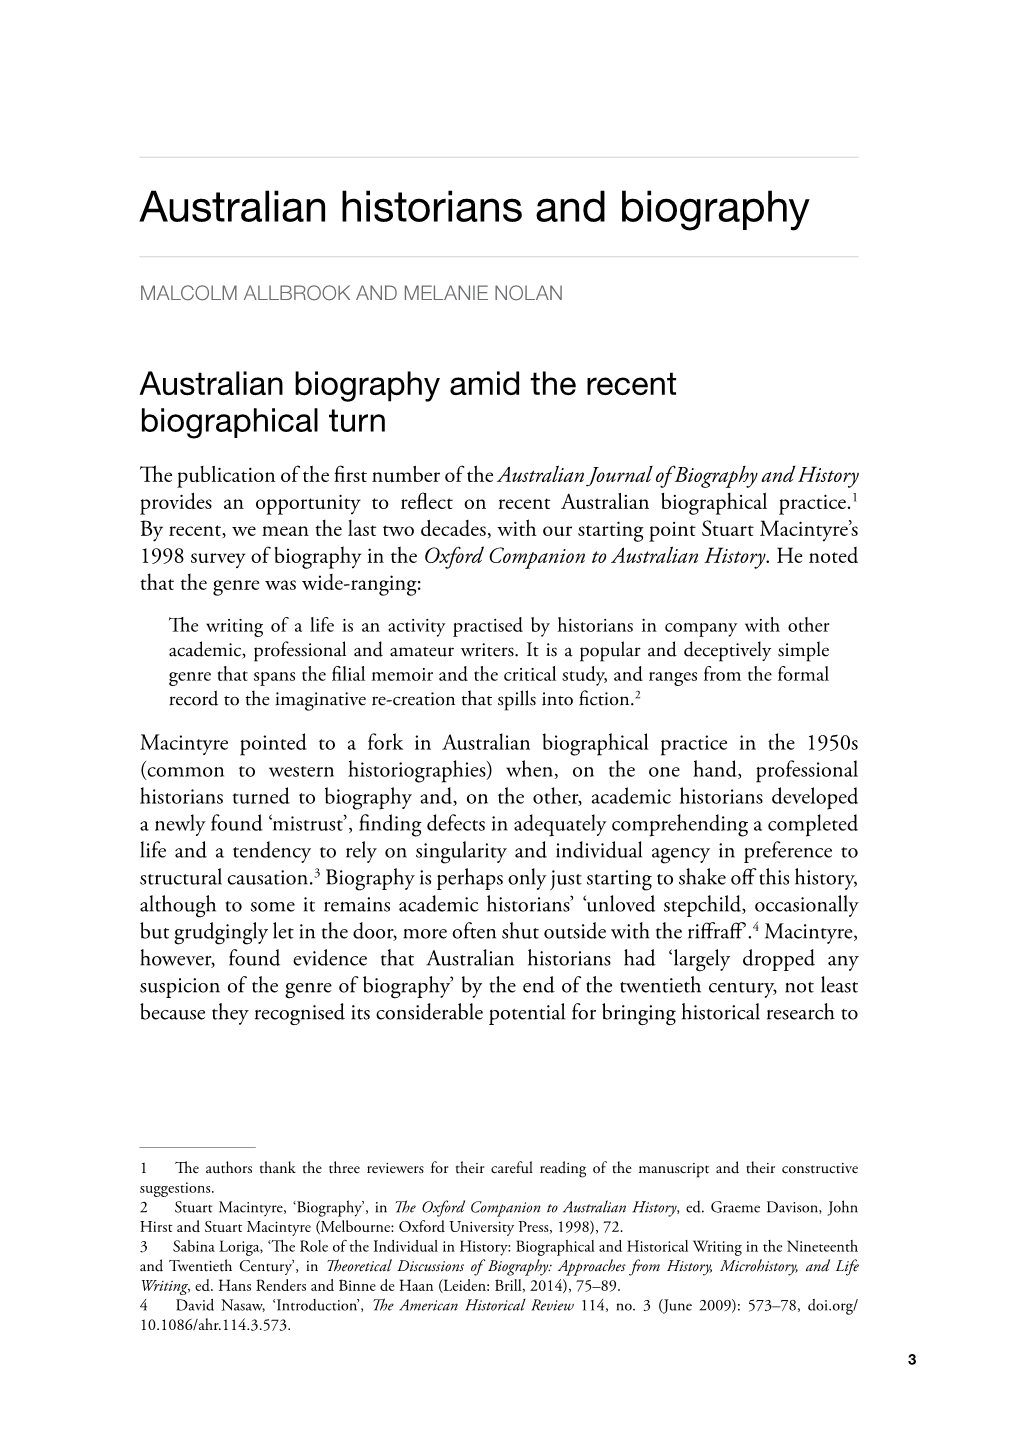 Australian Historians and Biography